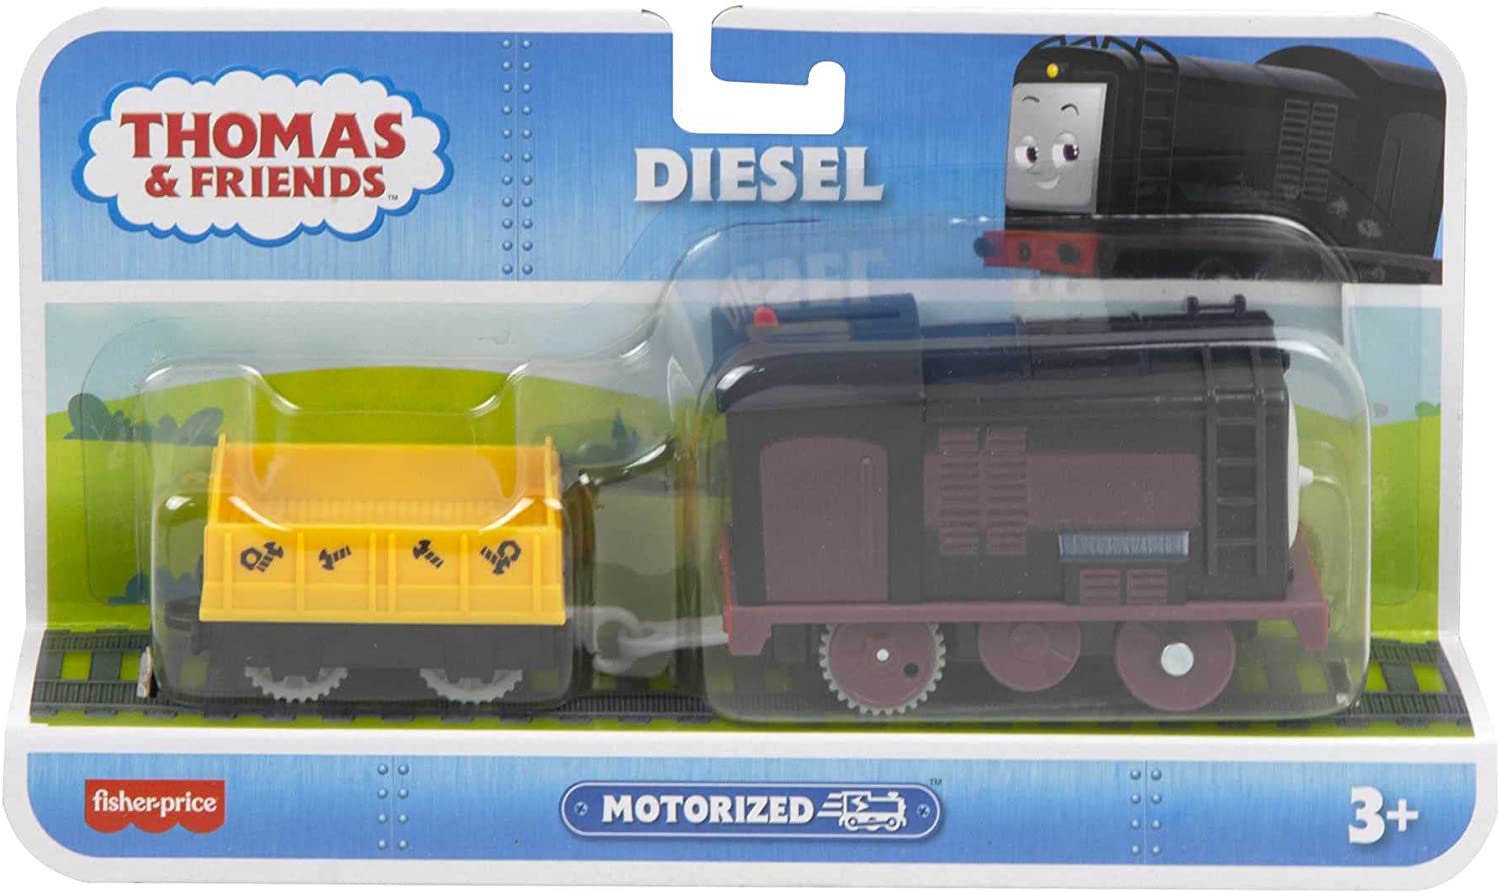 Thomas & Friends Diesel Motorized Toy Train Engine, Battery-Powered Toy Train